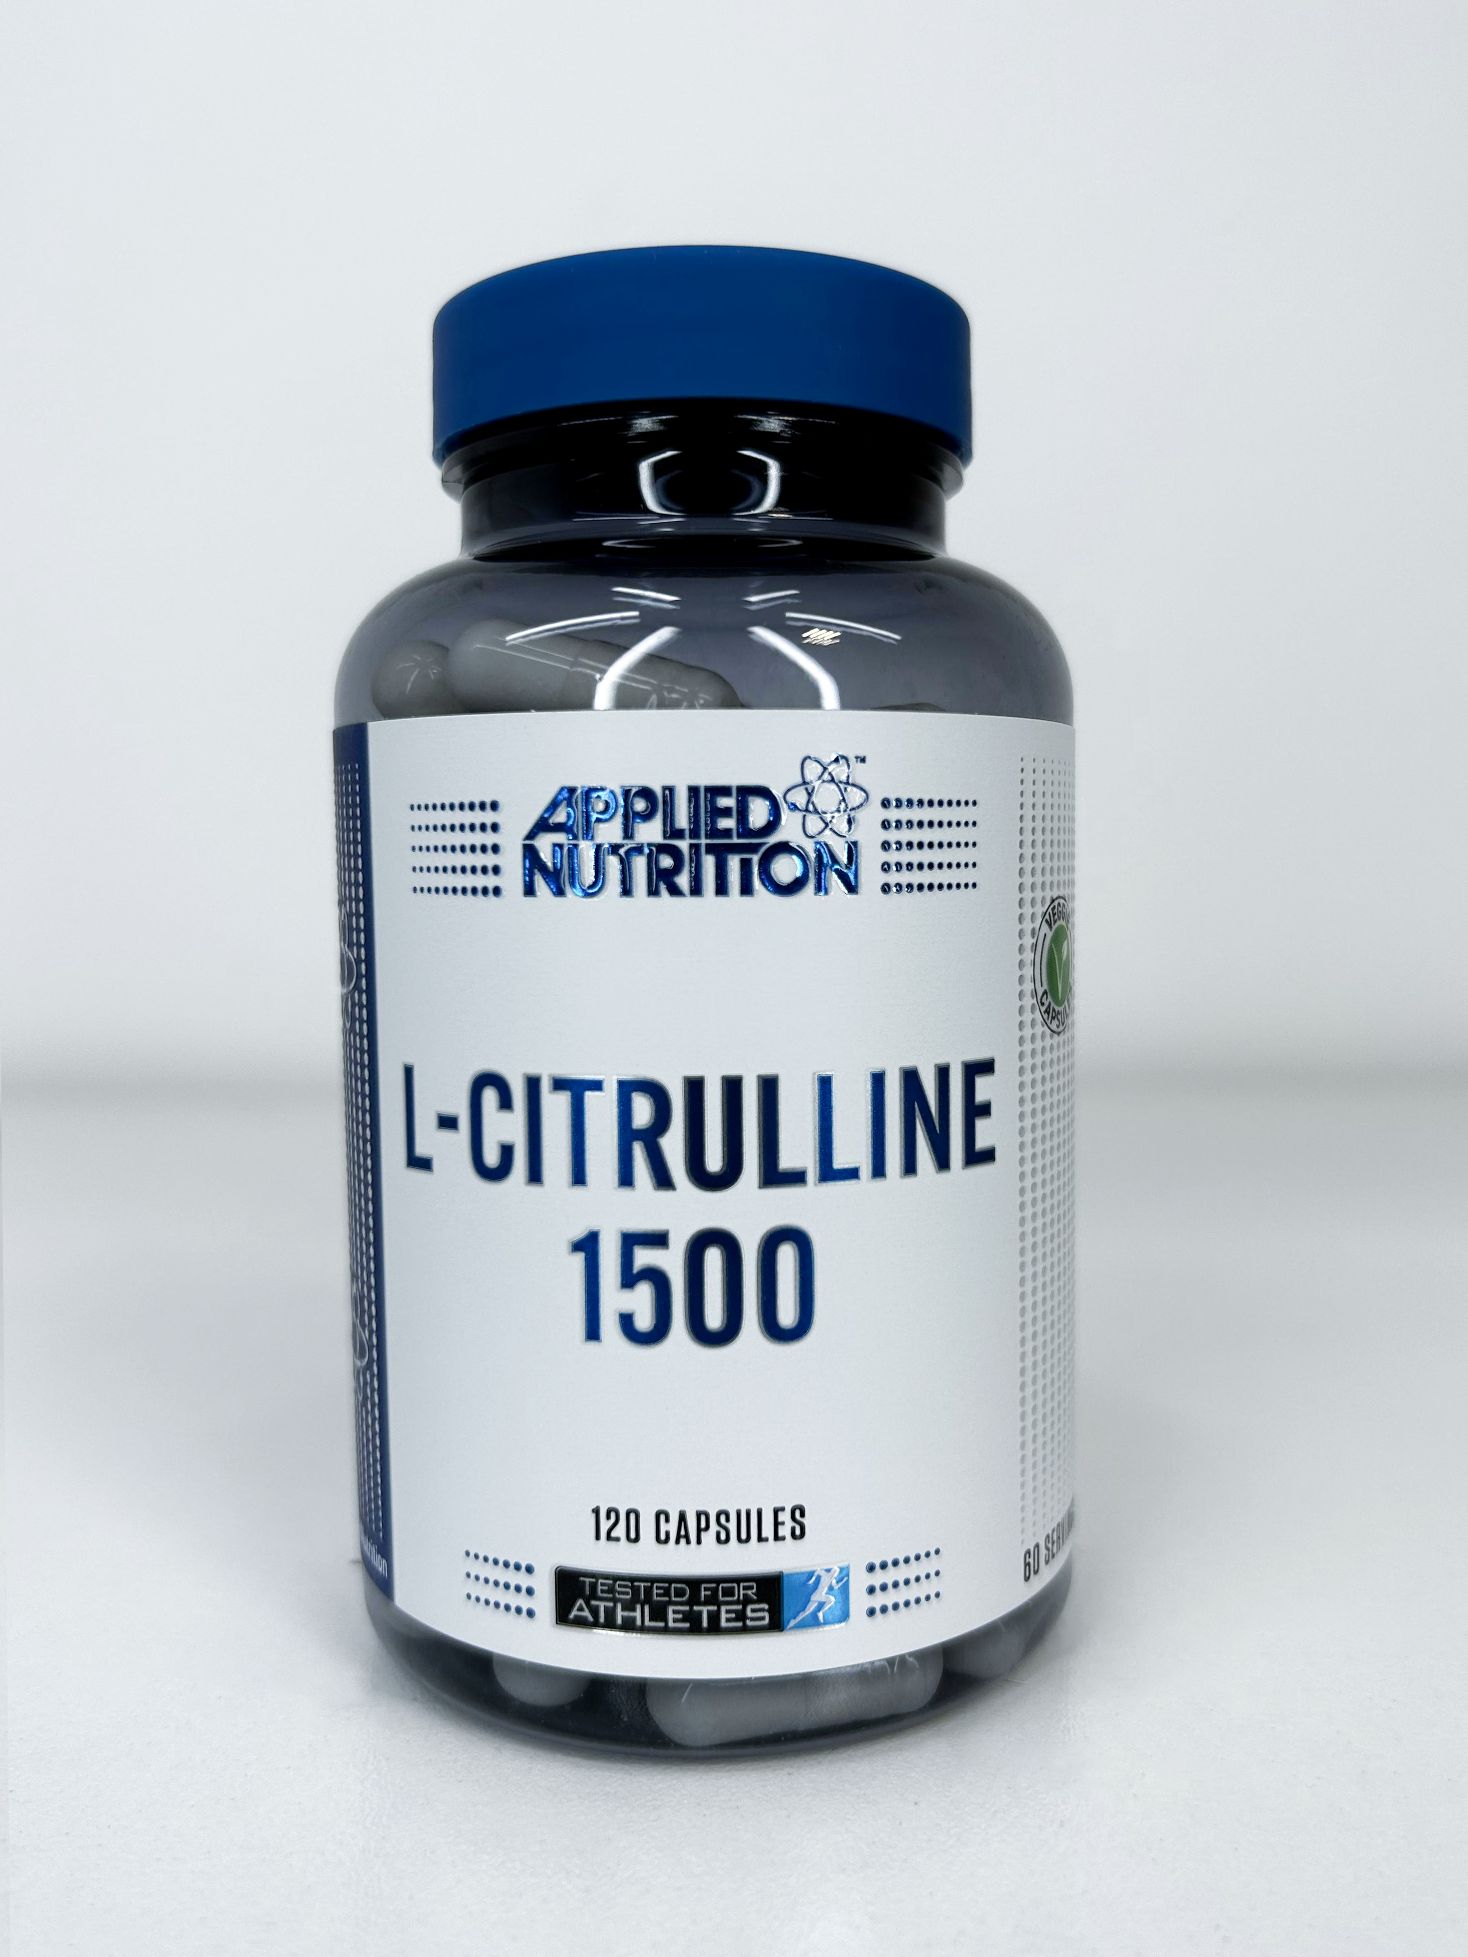 APPLIED NUTRITION	L-CITRULLINE 1500 (120 CAPSULES)